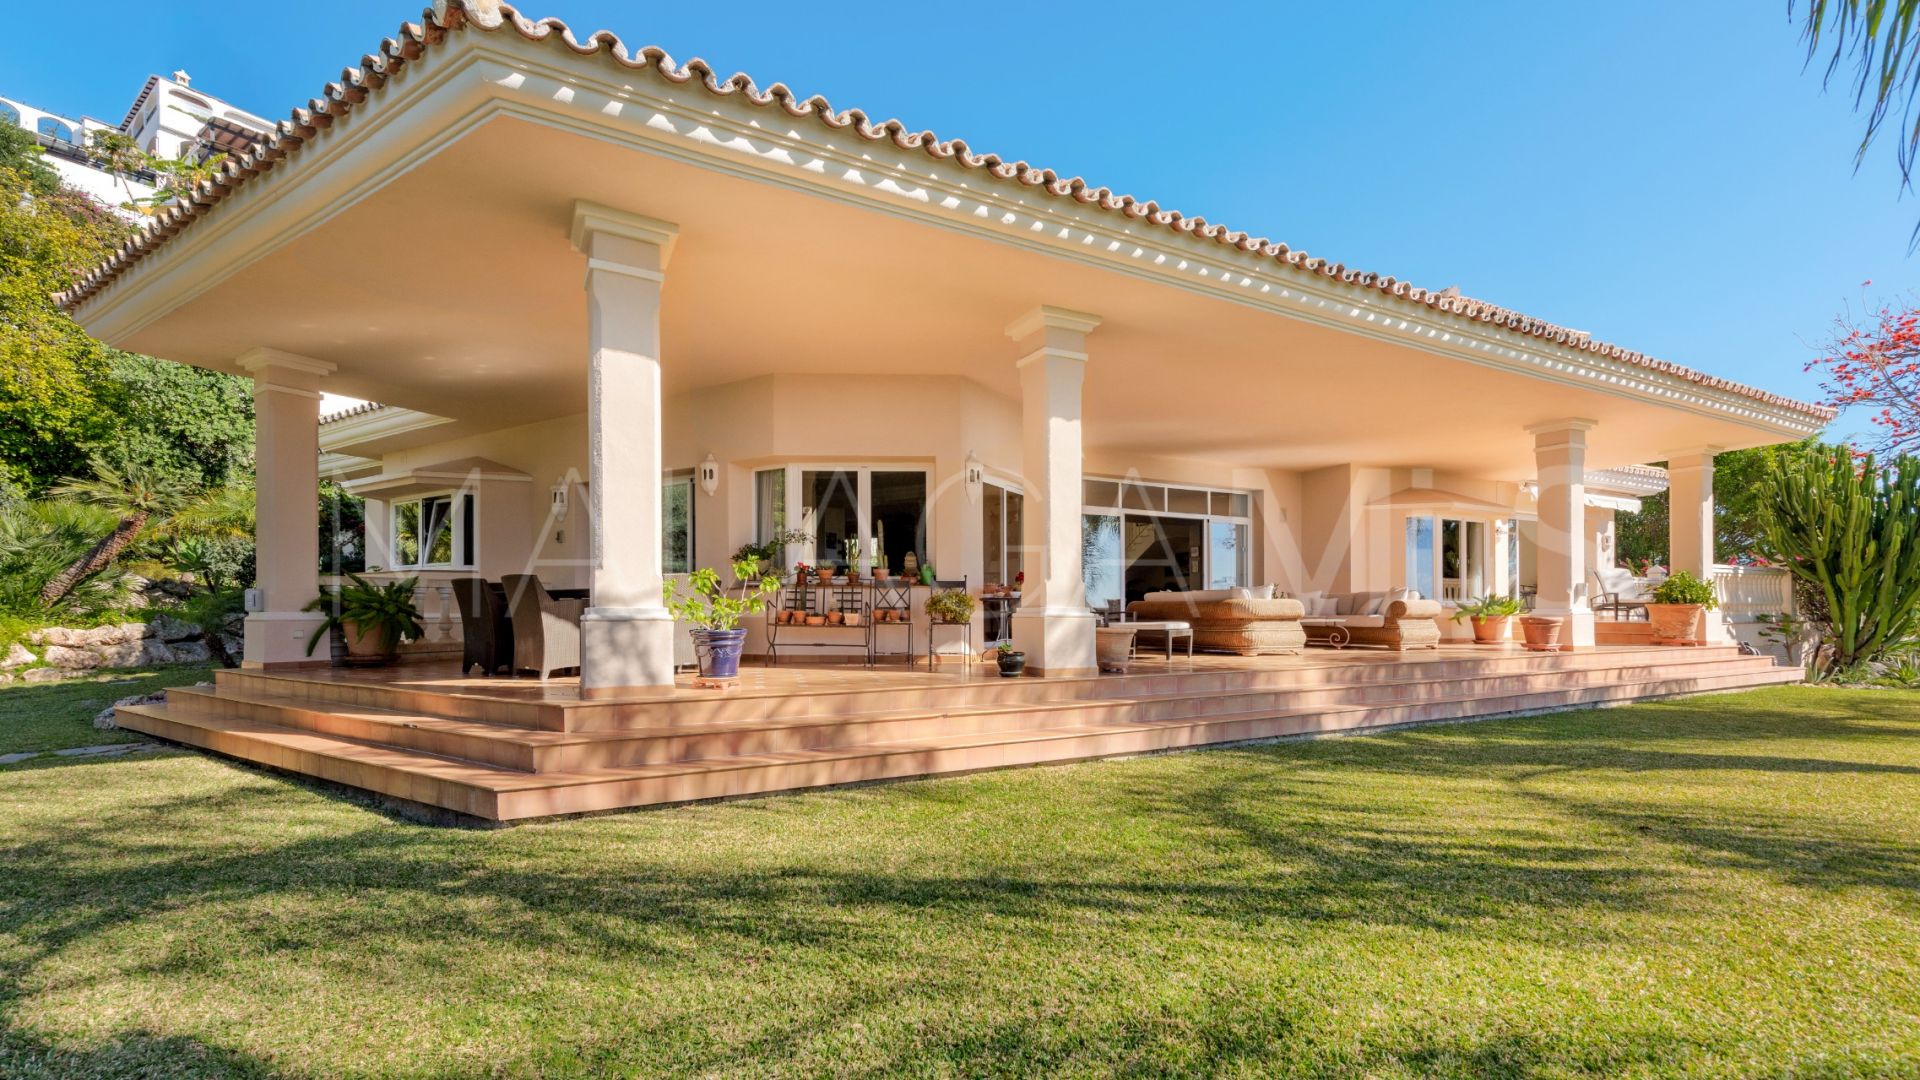 4 bedrooms villa in El Herrojo for sale